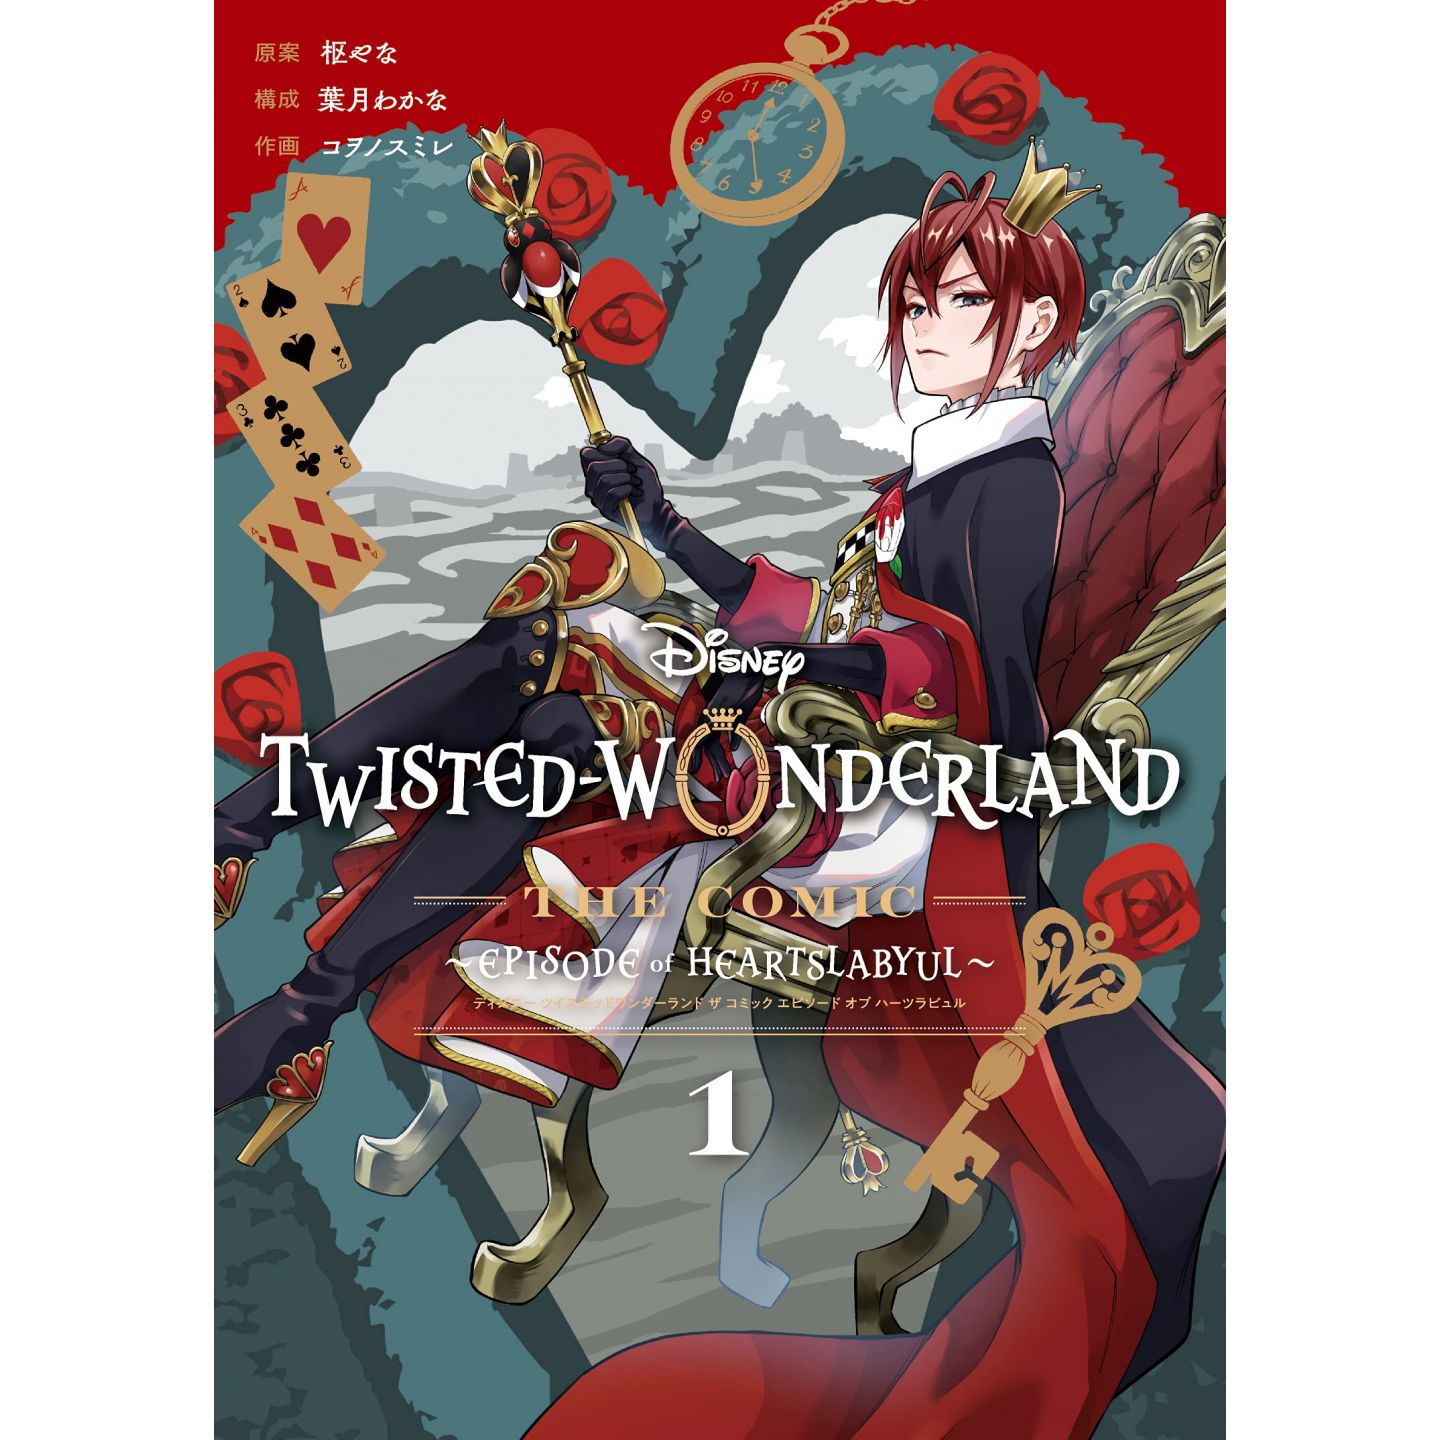 Disney Twisted Wonderland The Comic - Episode of Heartslabyul vol.1 - G  Fantasy Comics (japanese version)